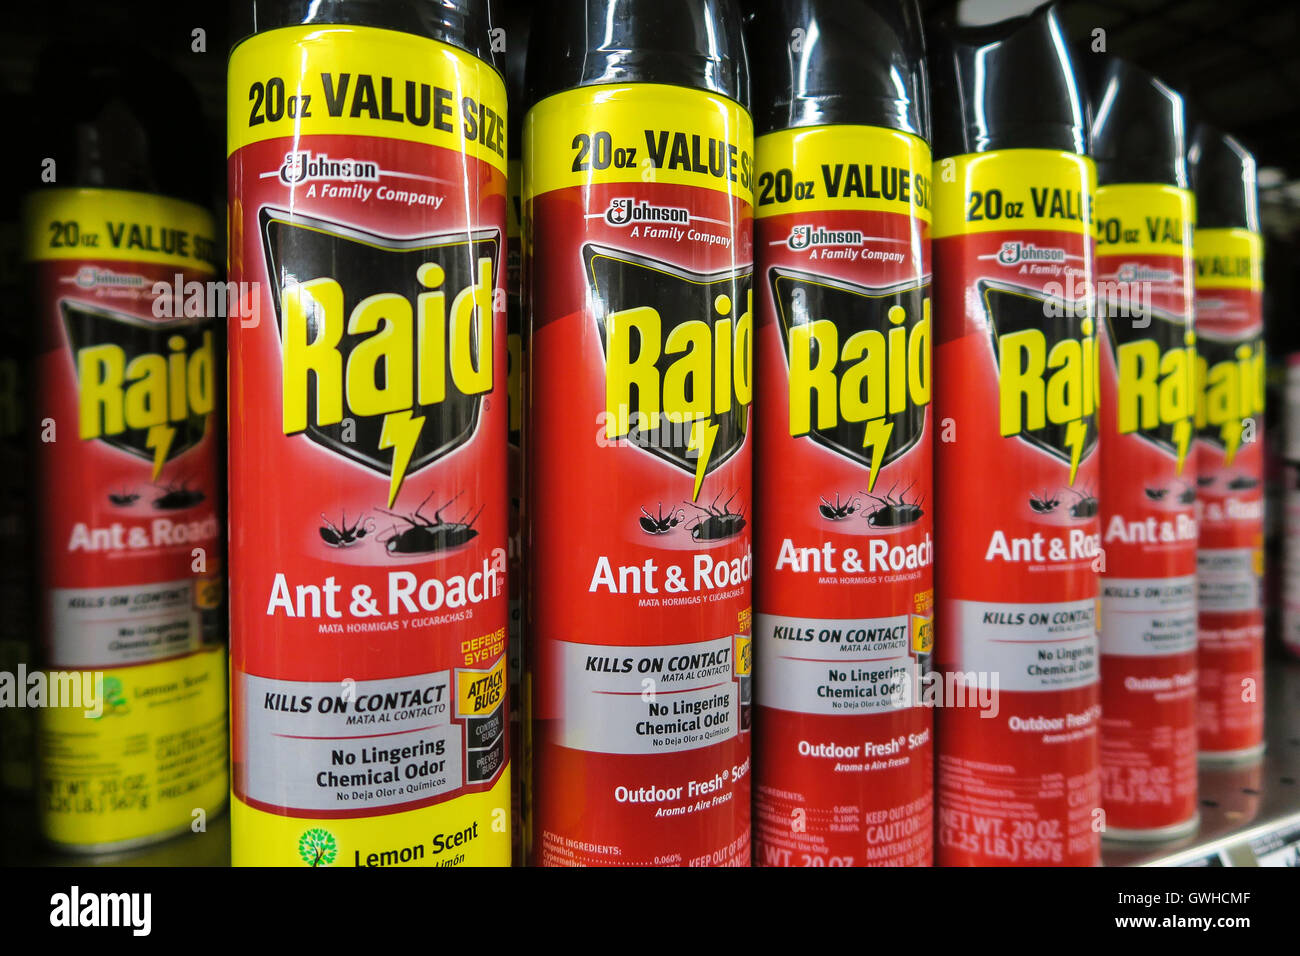 Raid bug spray hi-res stock photography and images - Alamy